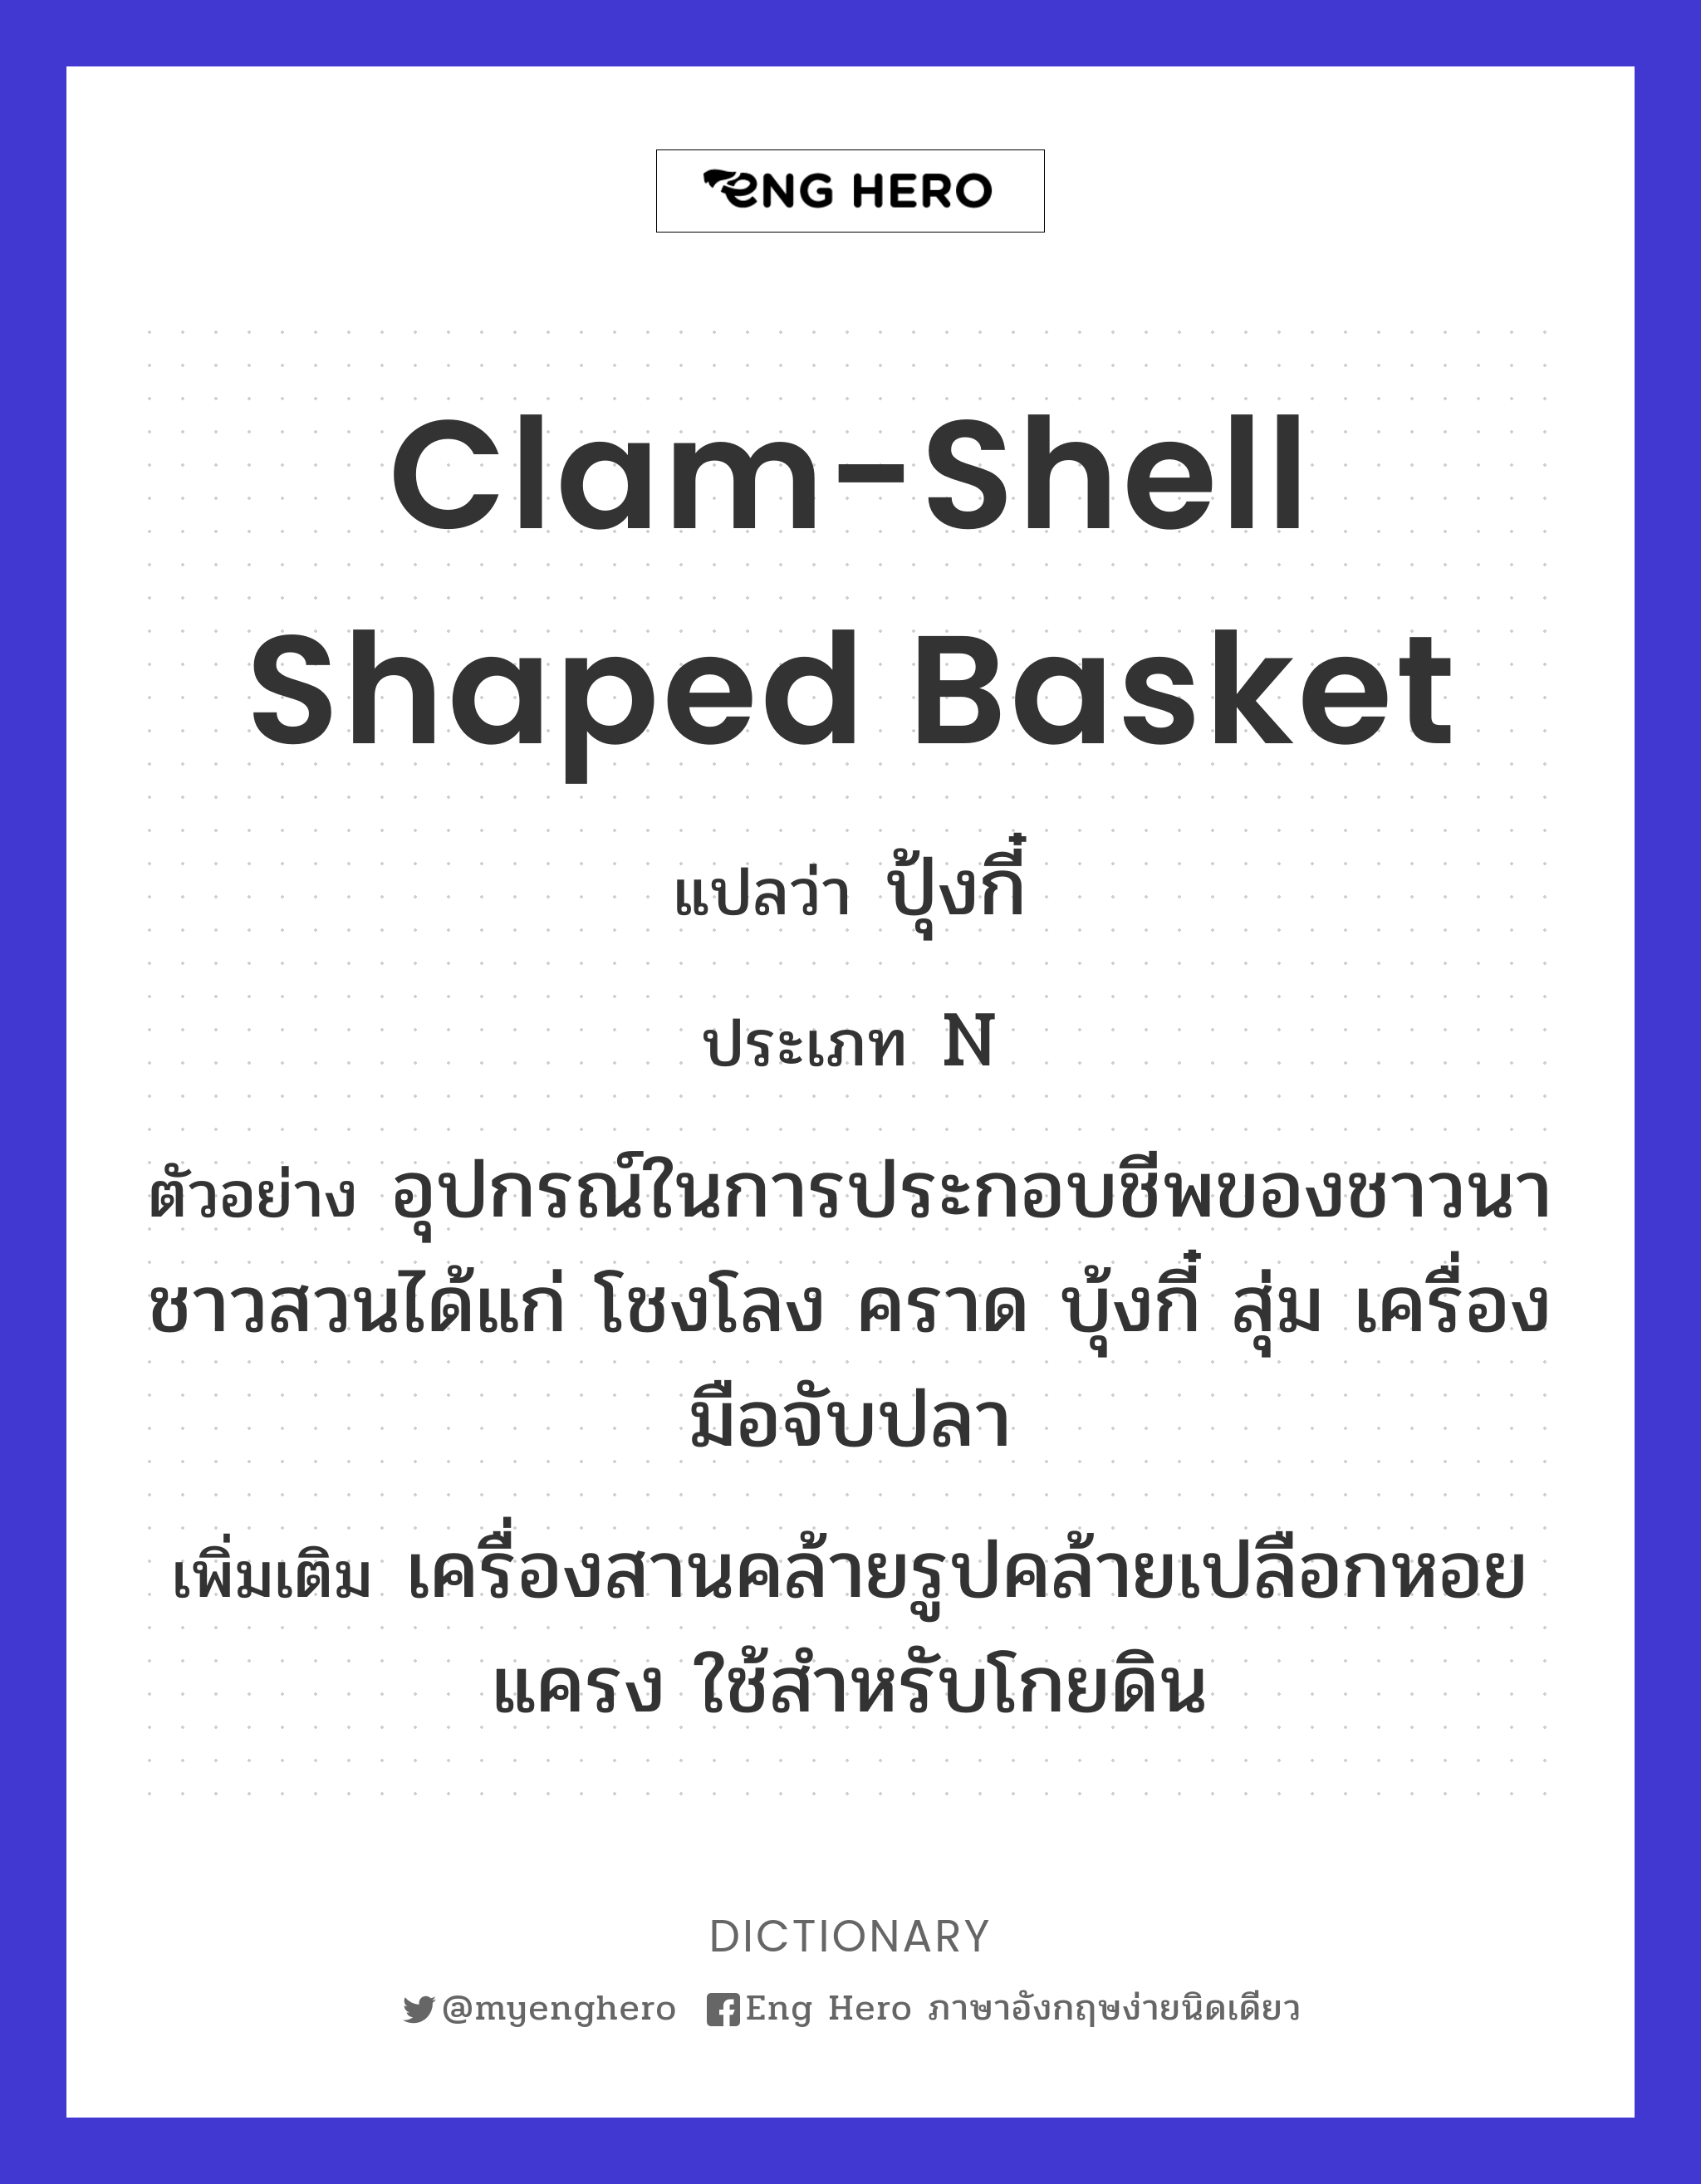 clam-shell shaped basket